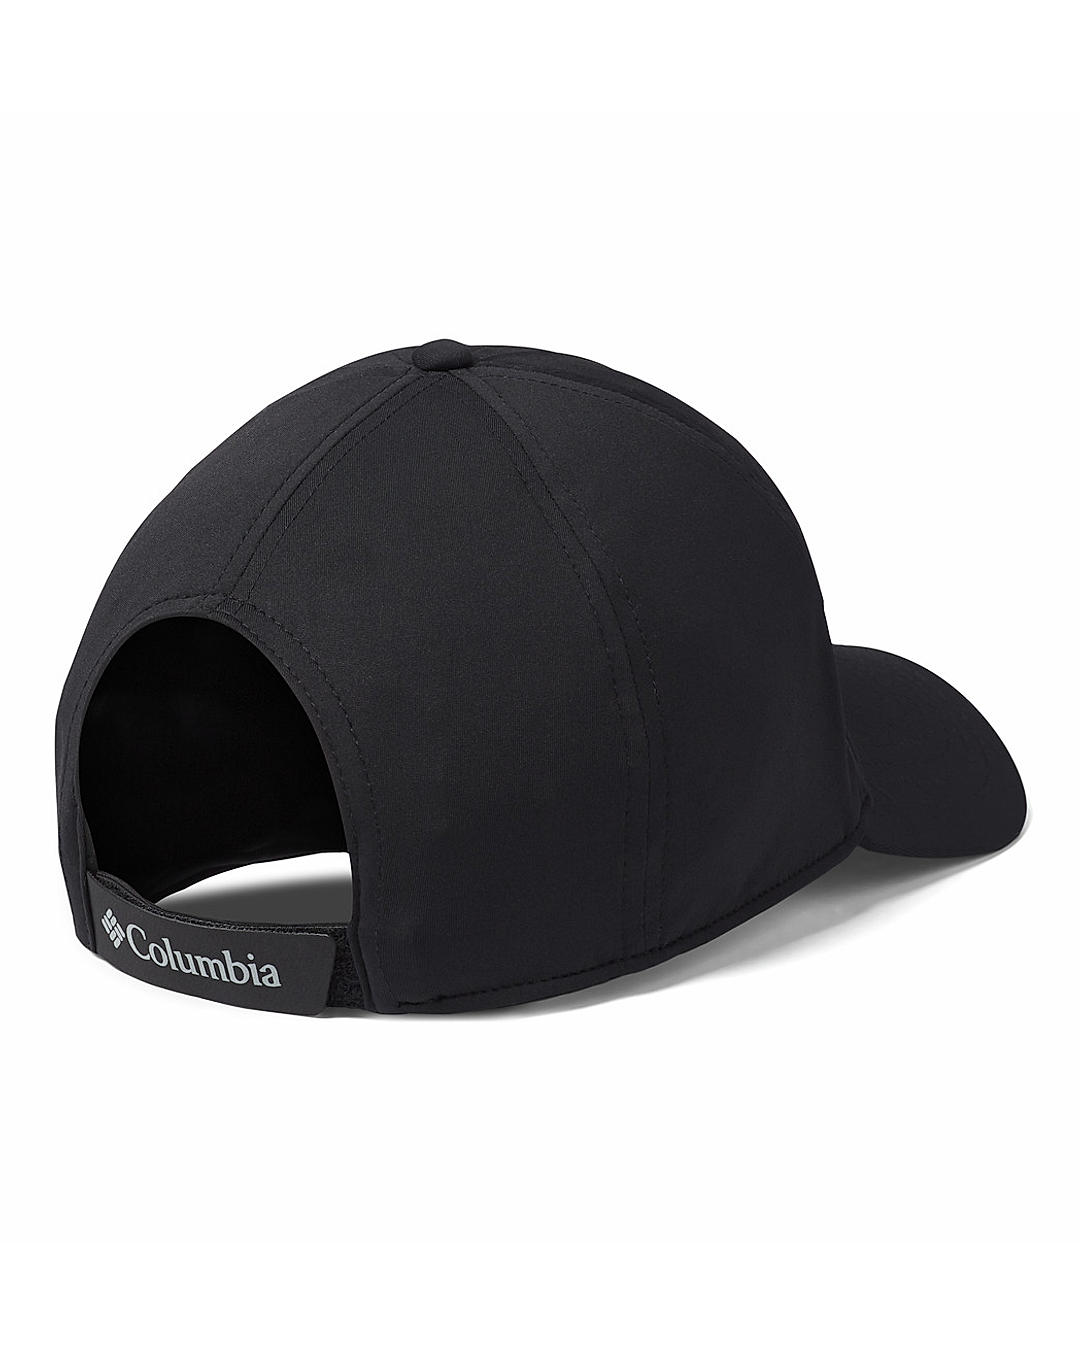 Columbia Unisex Black Coolhead II Ball Cap